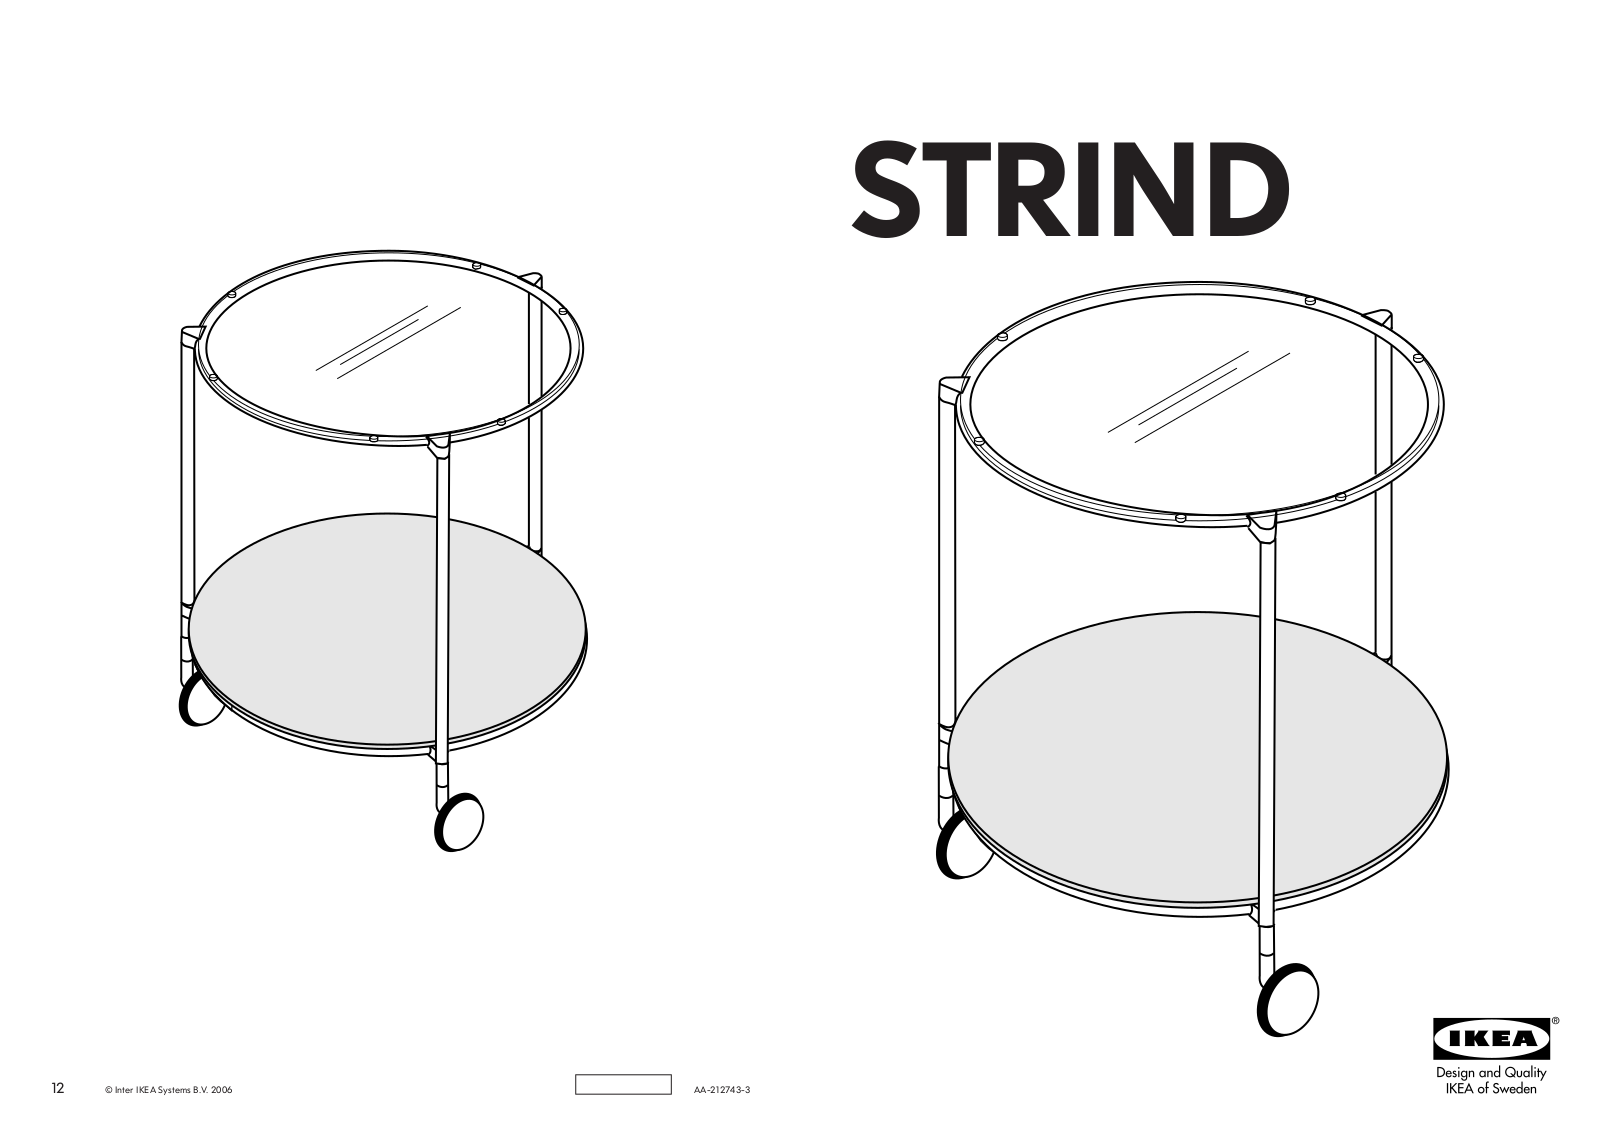 IKEA STRIND SIDE TABLE 20 Assembly Instruction